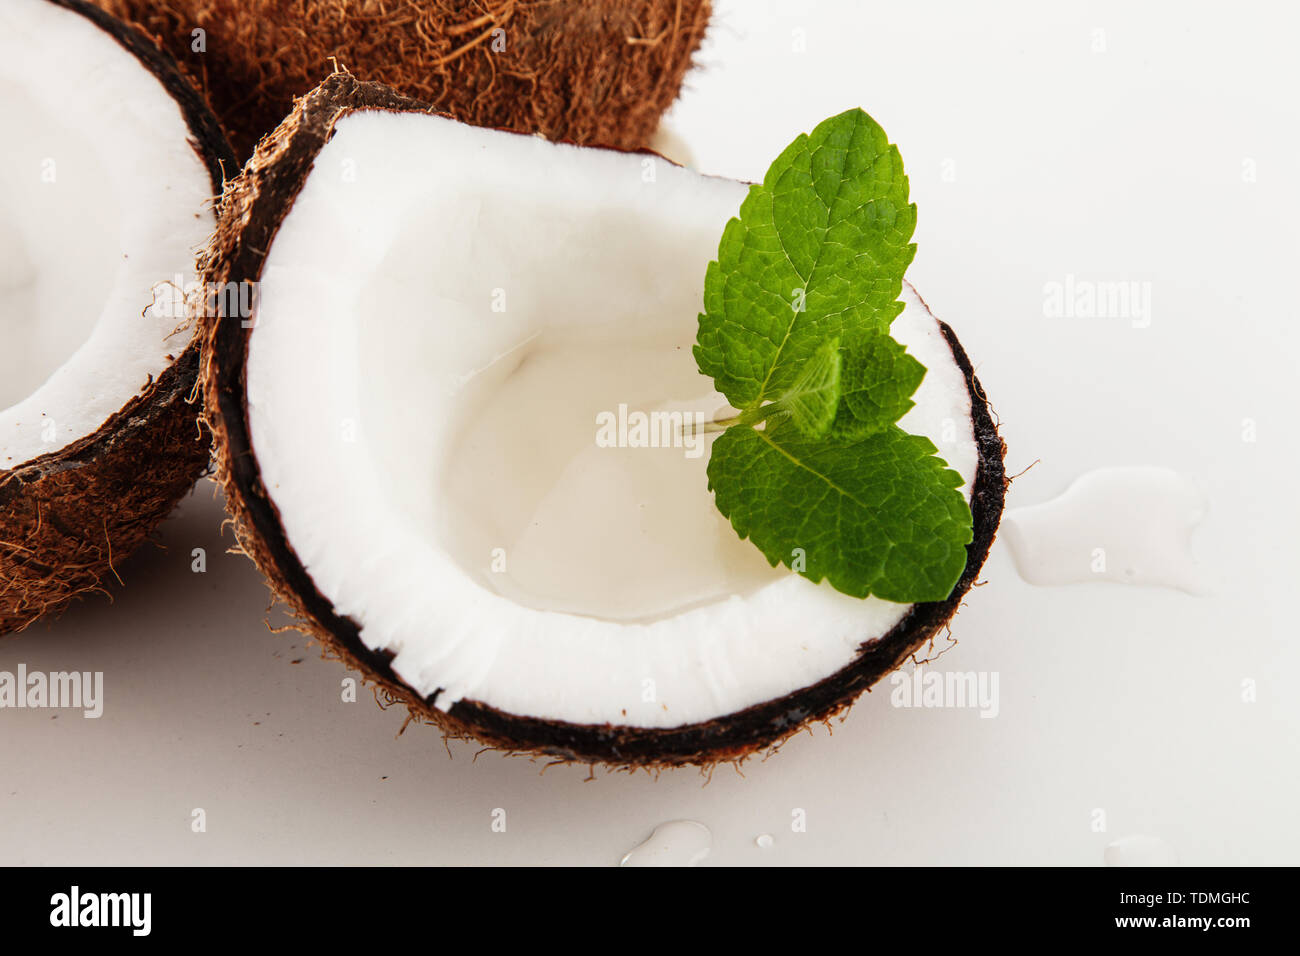 Cracked coconut isolated on white background Stock Photo